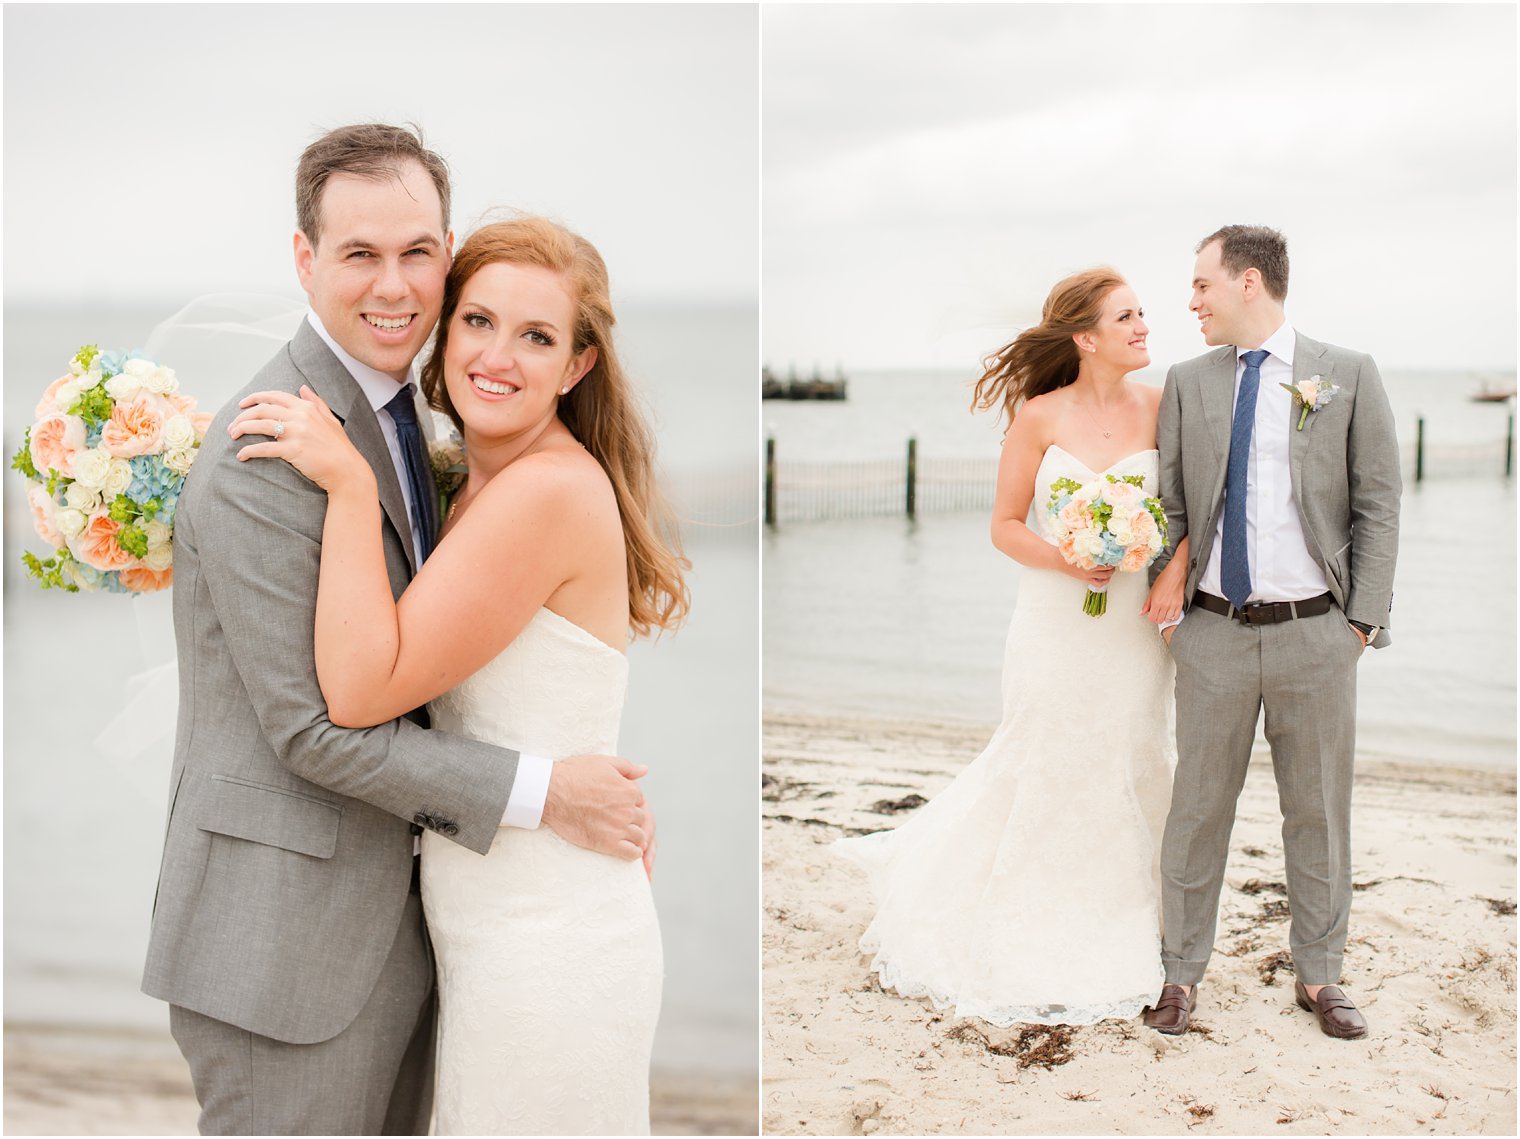 Brant Beach Yacht Club wedding portraits by Idalia Photography